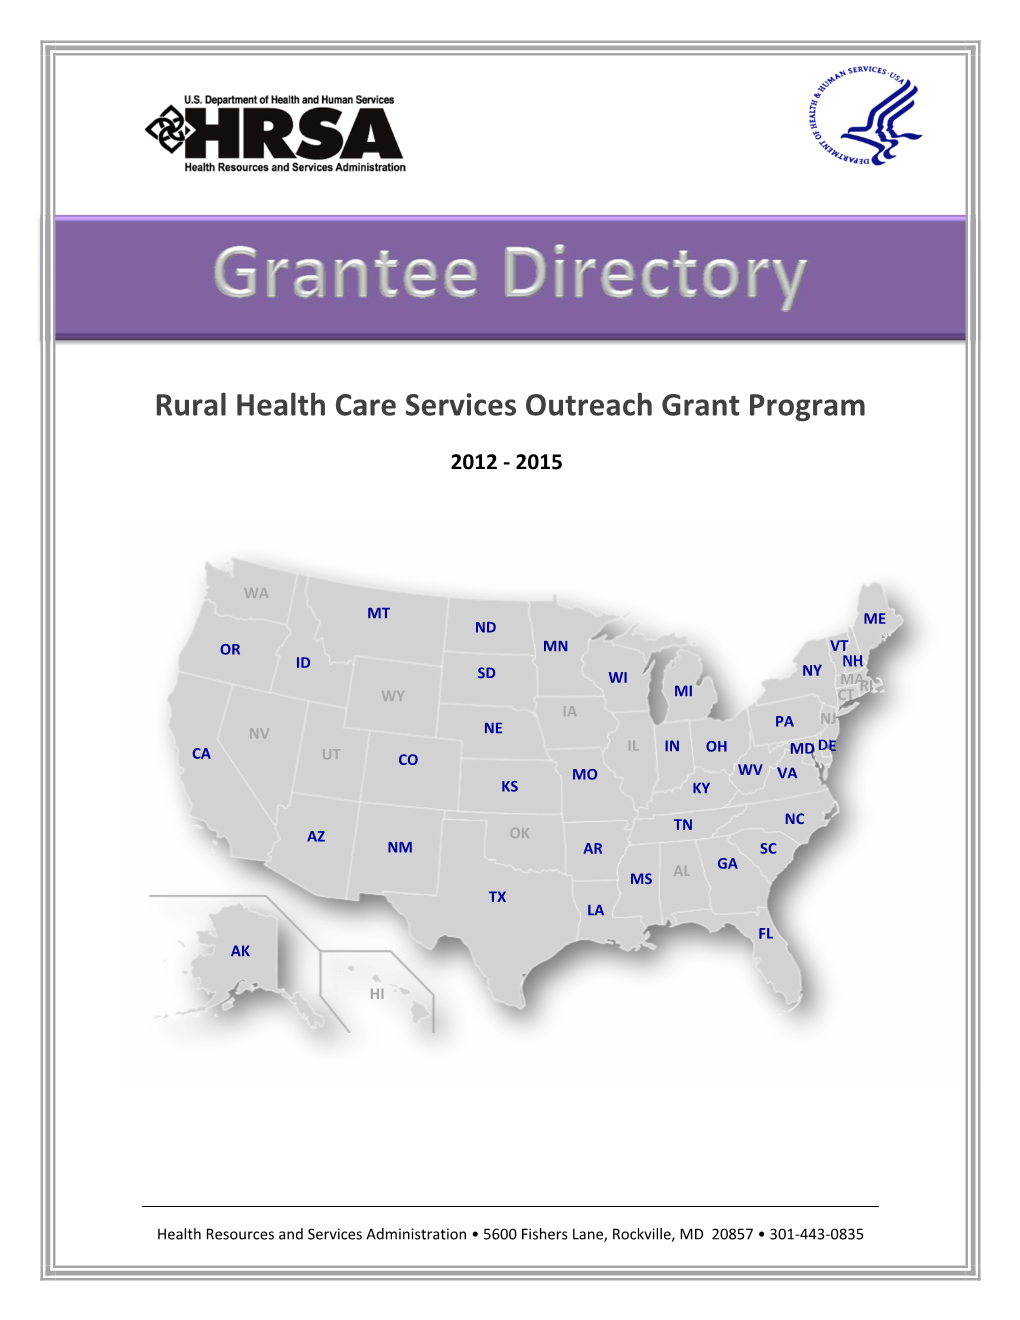 Rural Health Care Services Outreach Grant Program 2012-2015